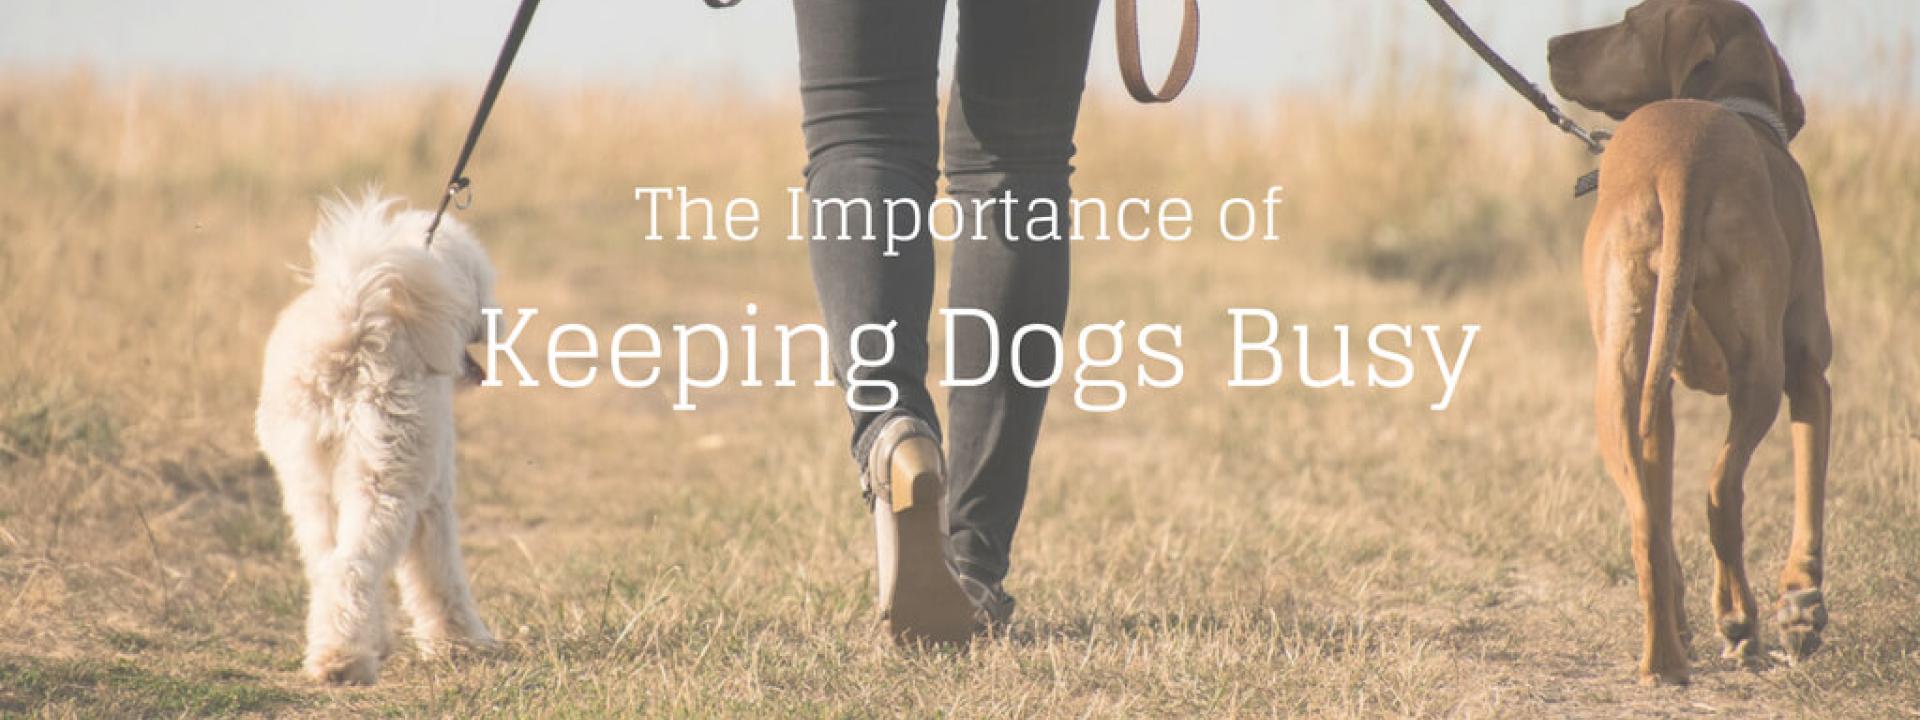 keep-dogs-busy-blog-header.jpg